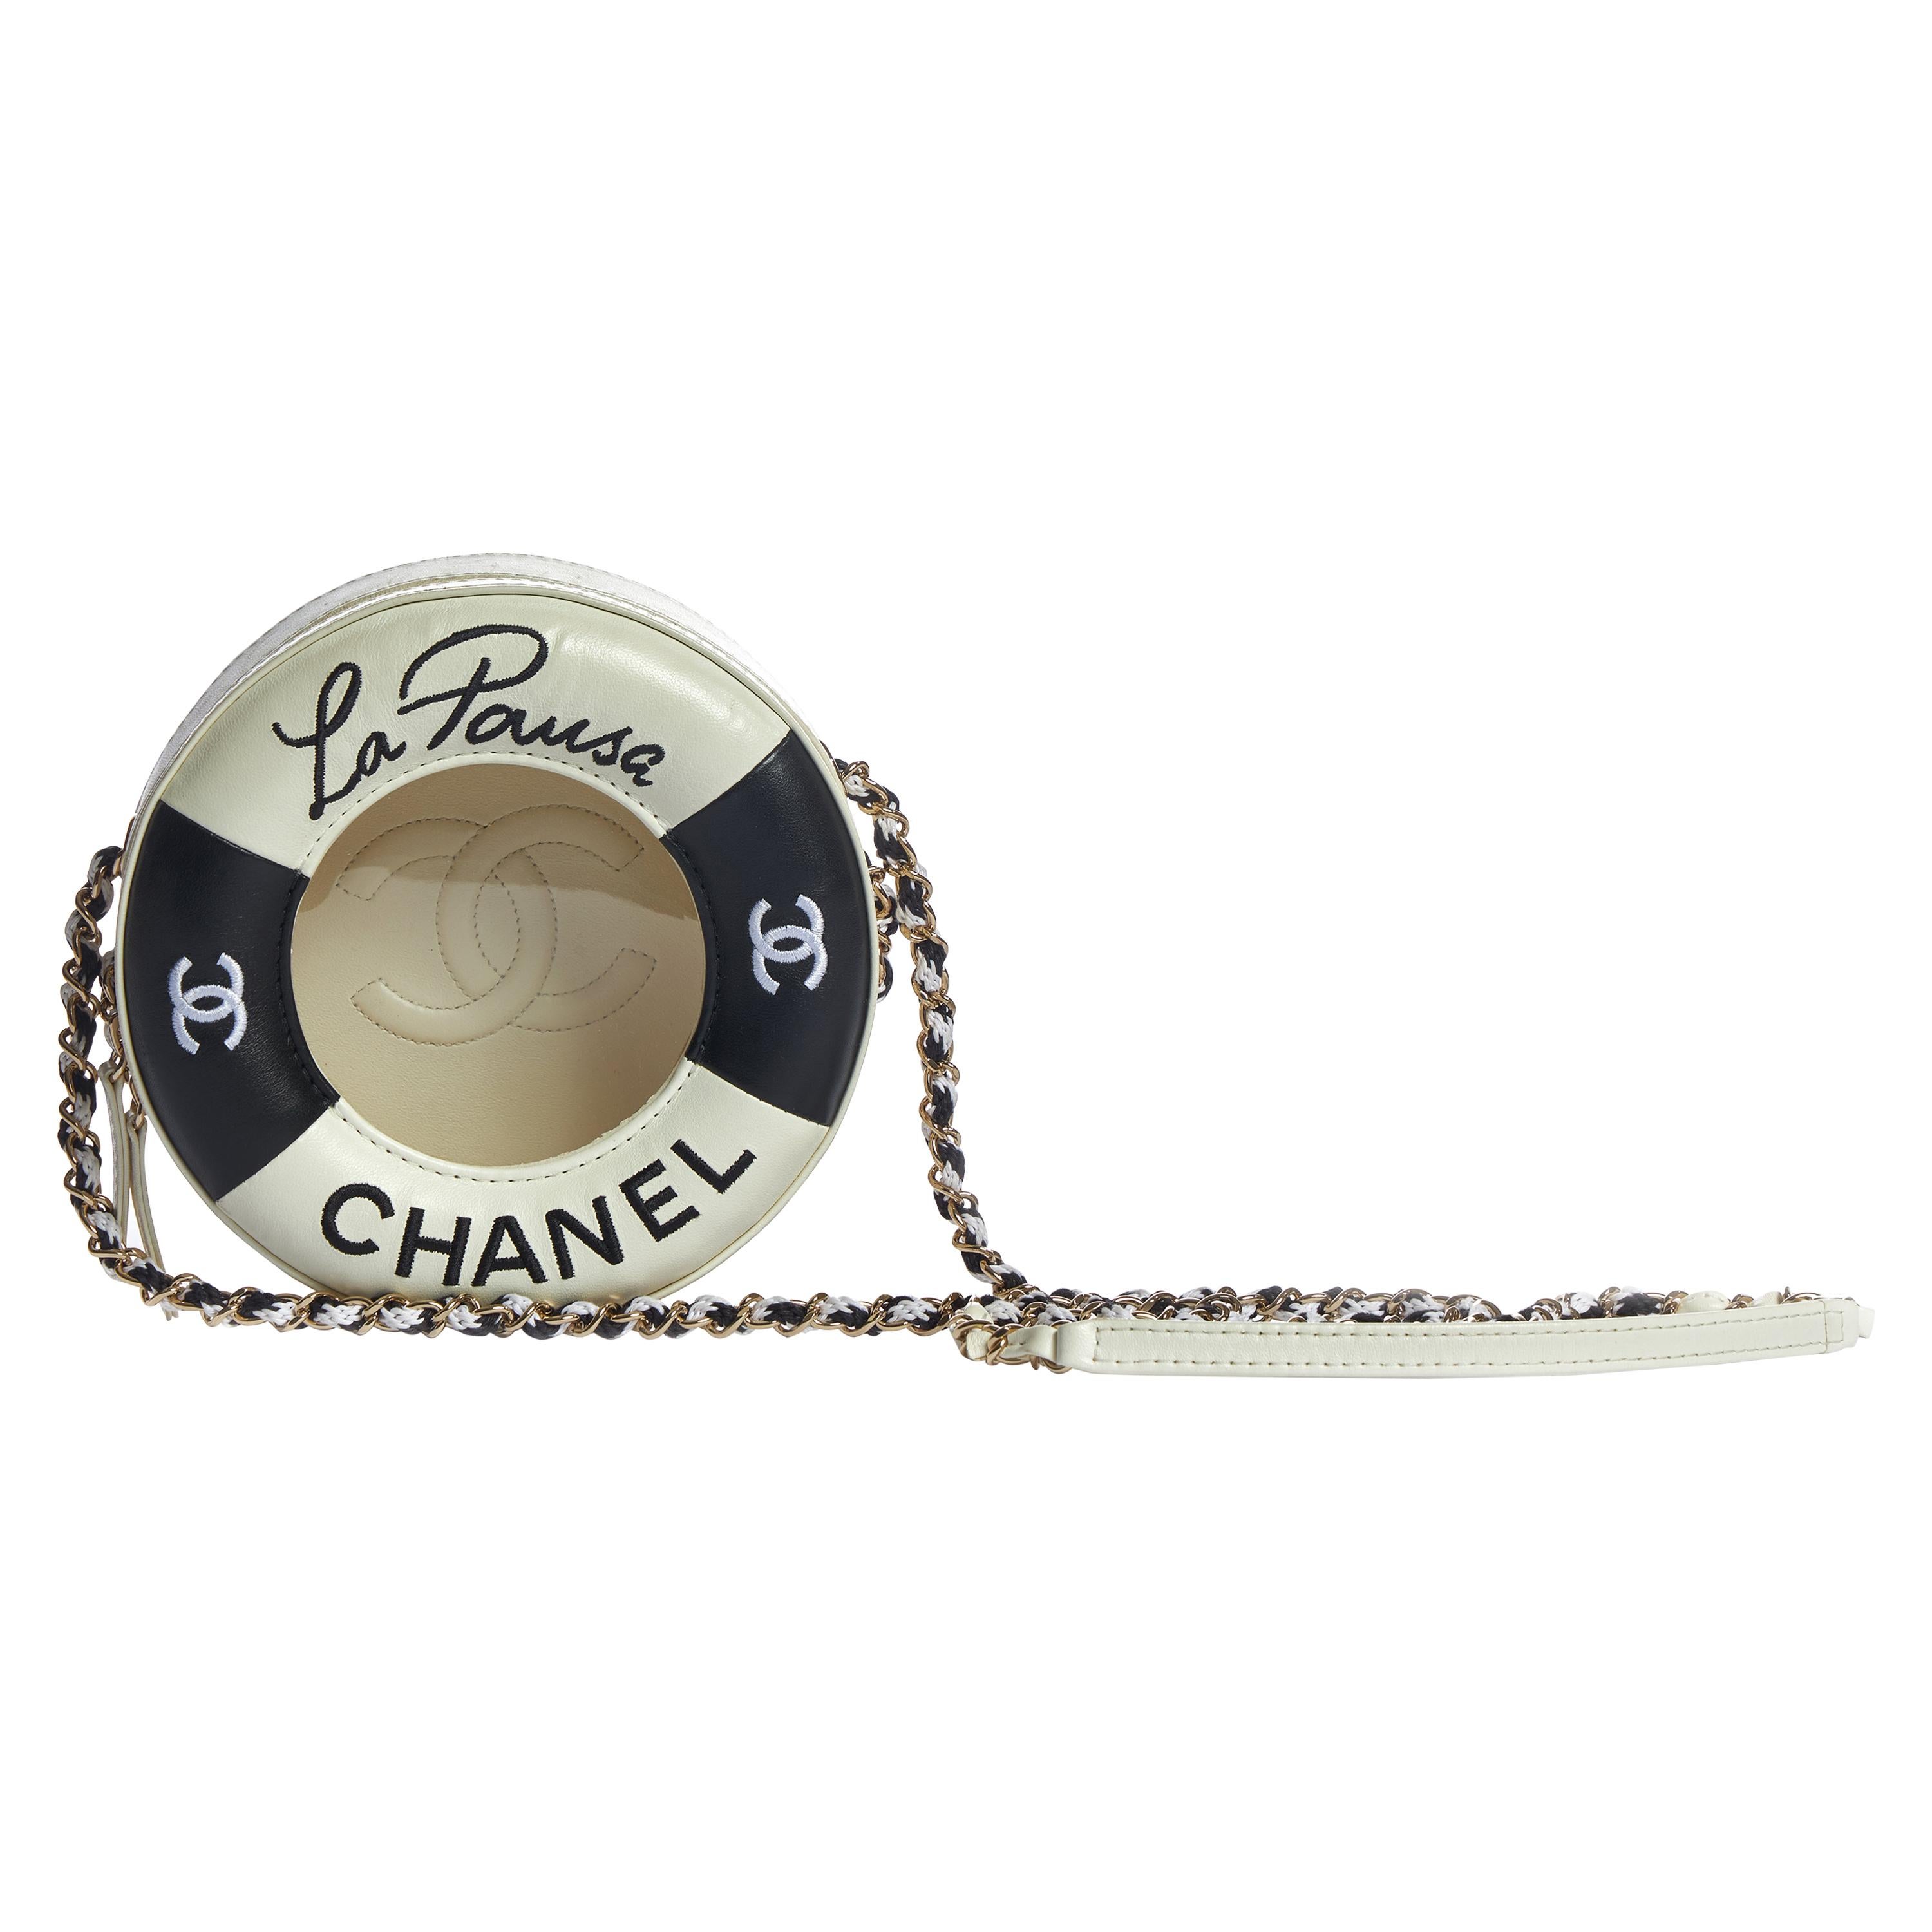 Chanel Limited Edition Cruise Crossbody Bag